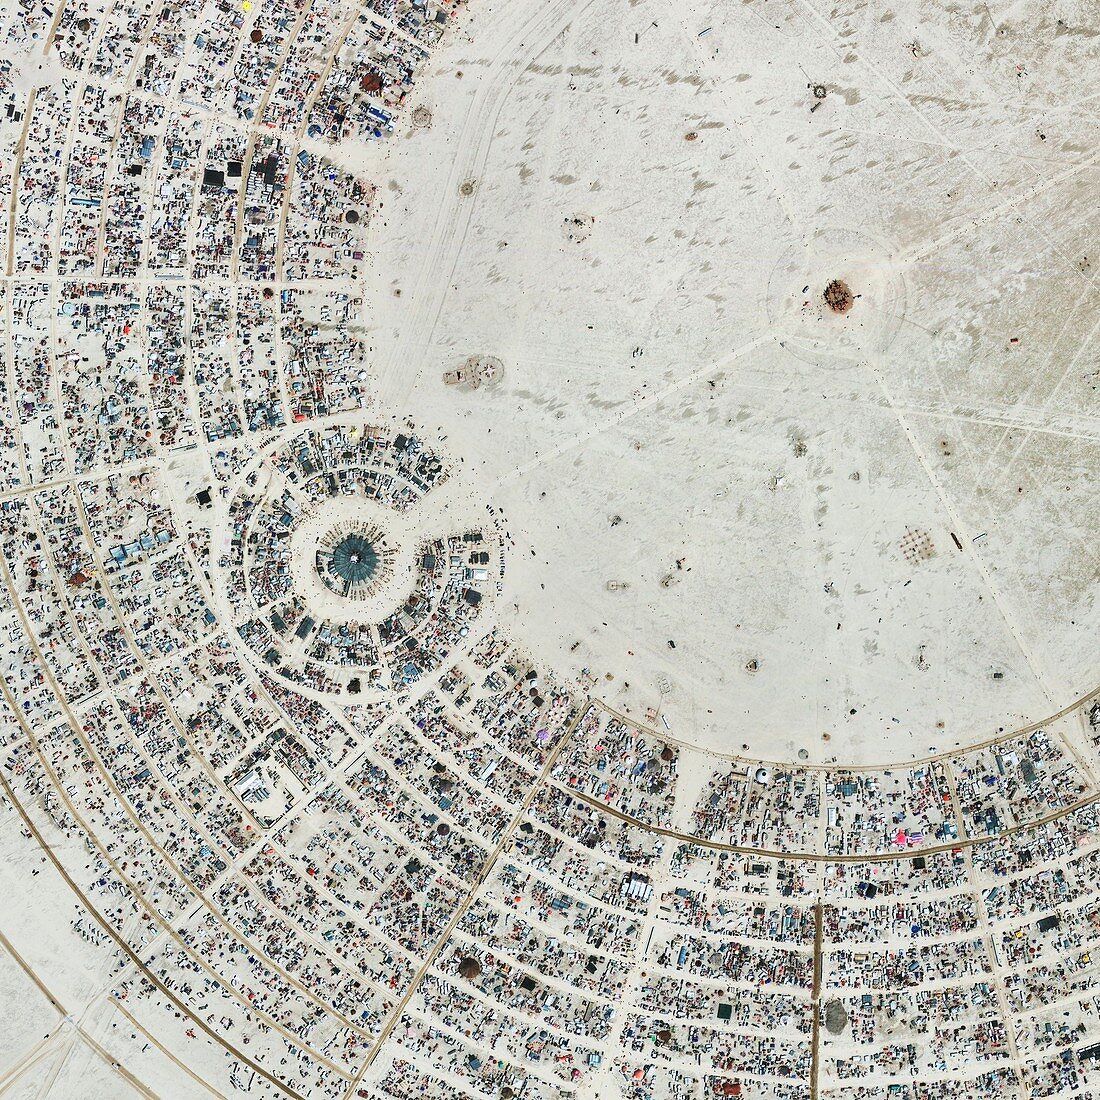 Burning Man festival,satellite image